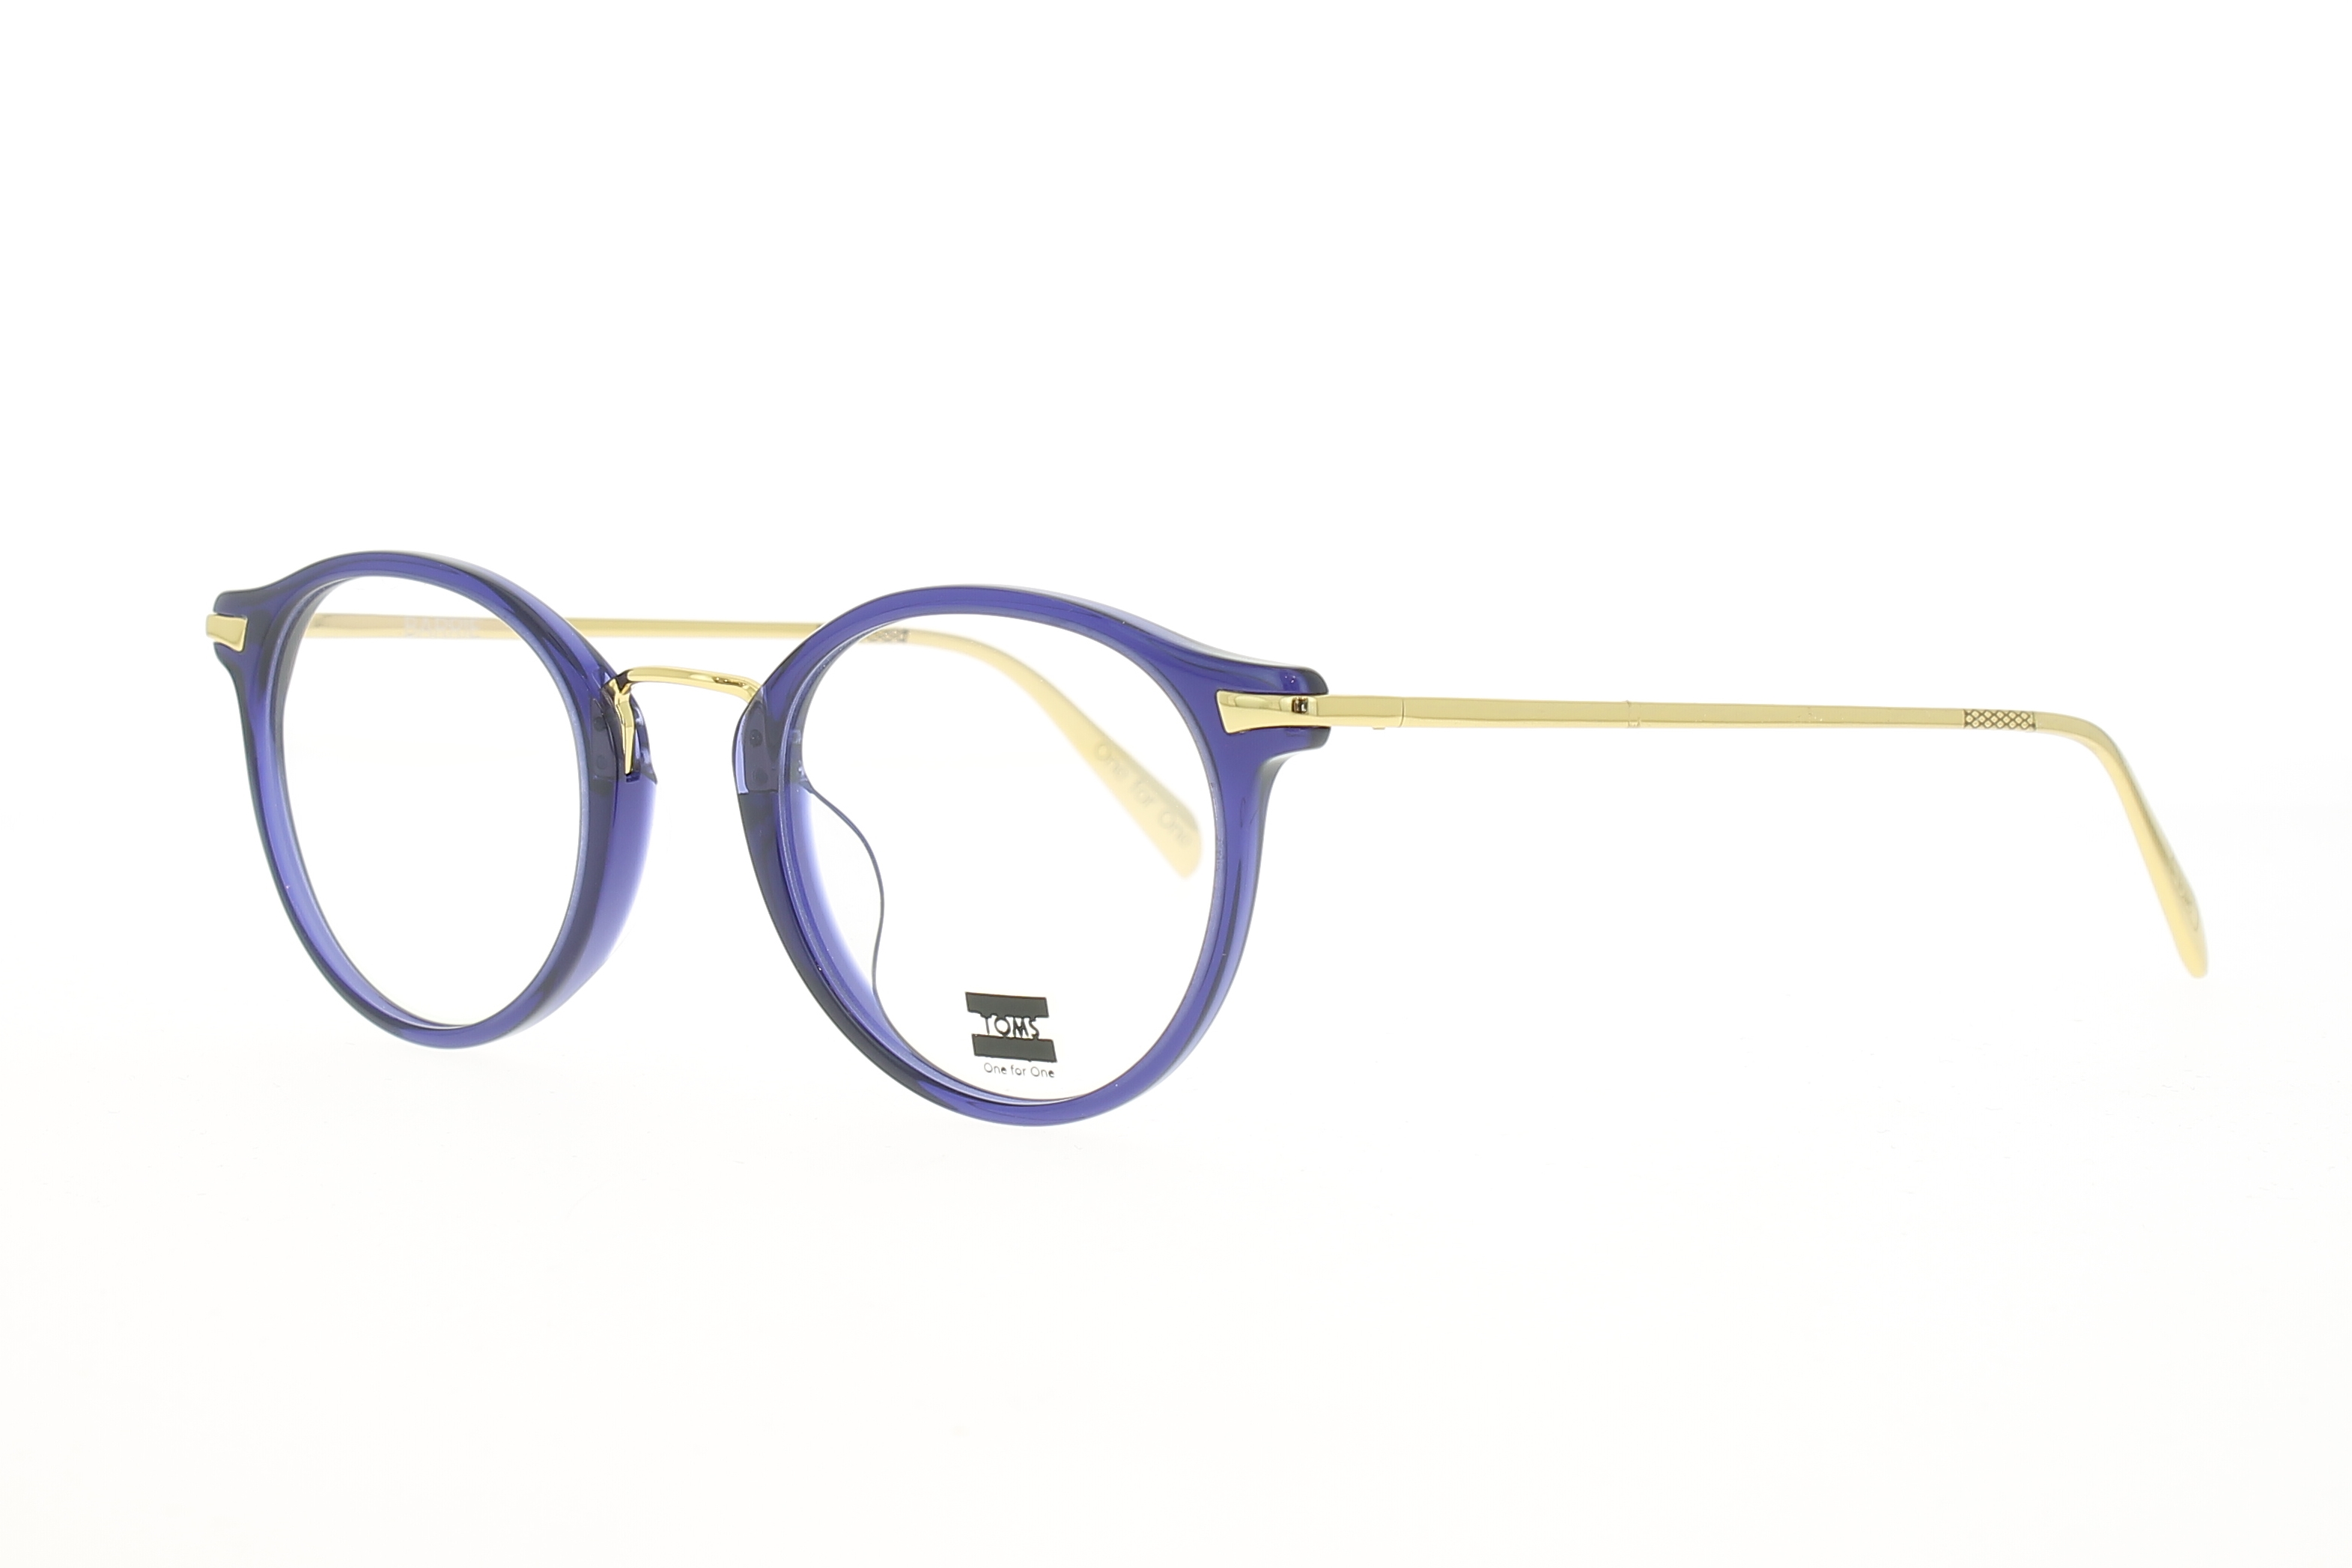 Glasses Toms Barrie, dark blue colour - Doyle